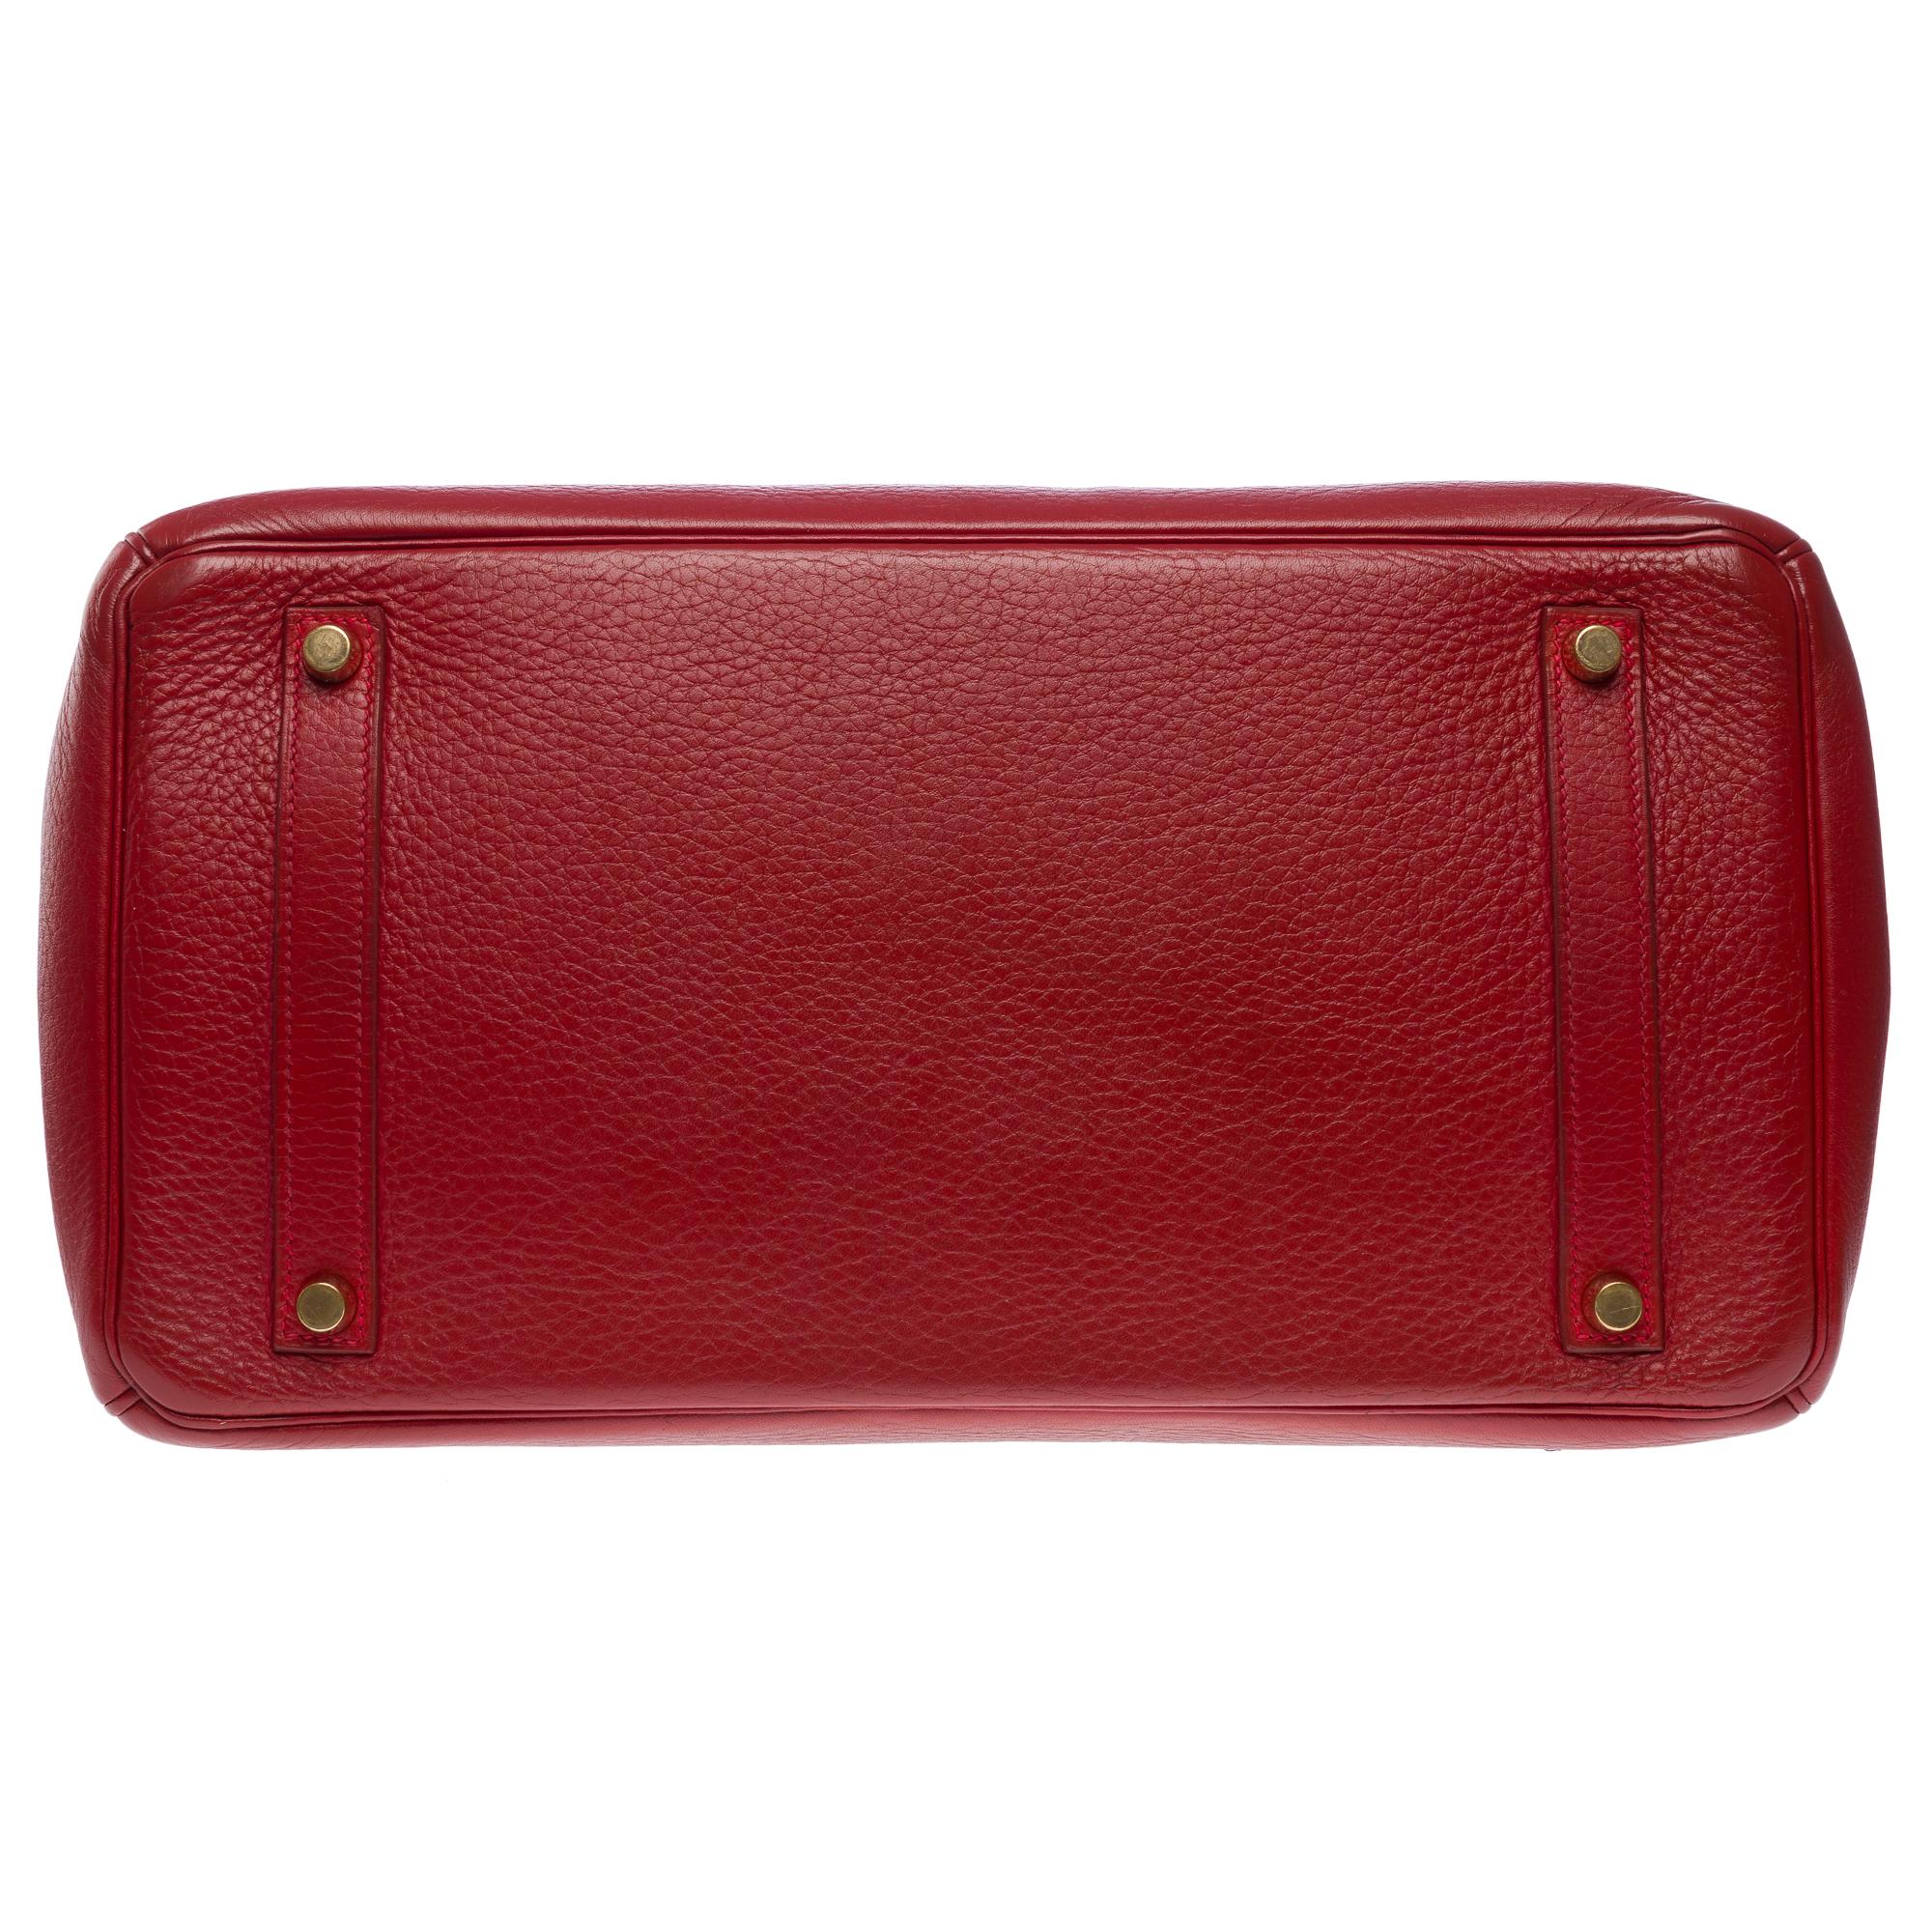 Stunning Hermès Birkin 35 handbag in Rouge Garance Togo leather, GHW For Sale 5